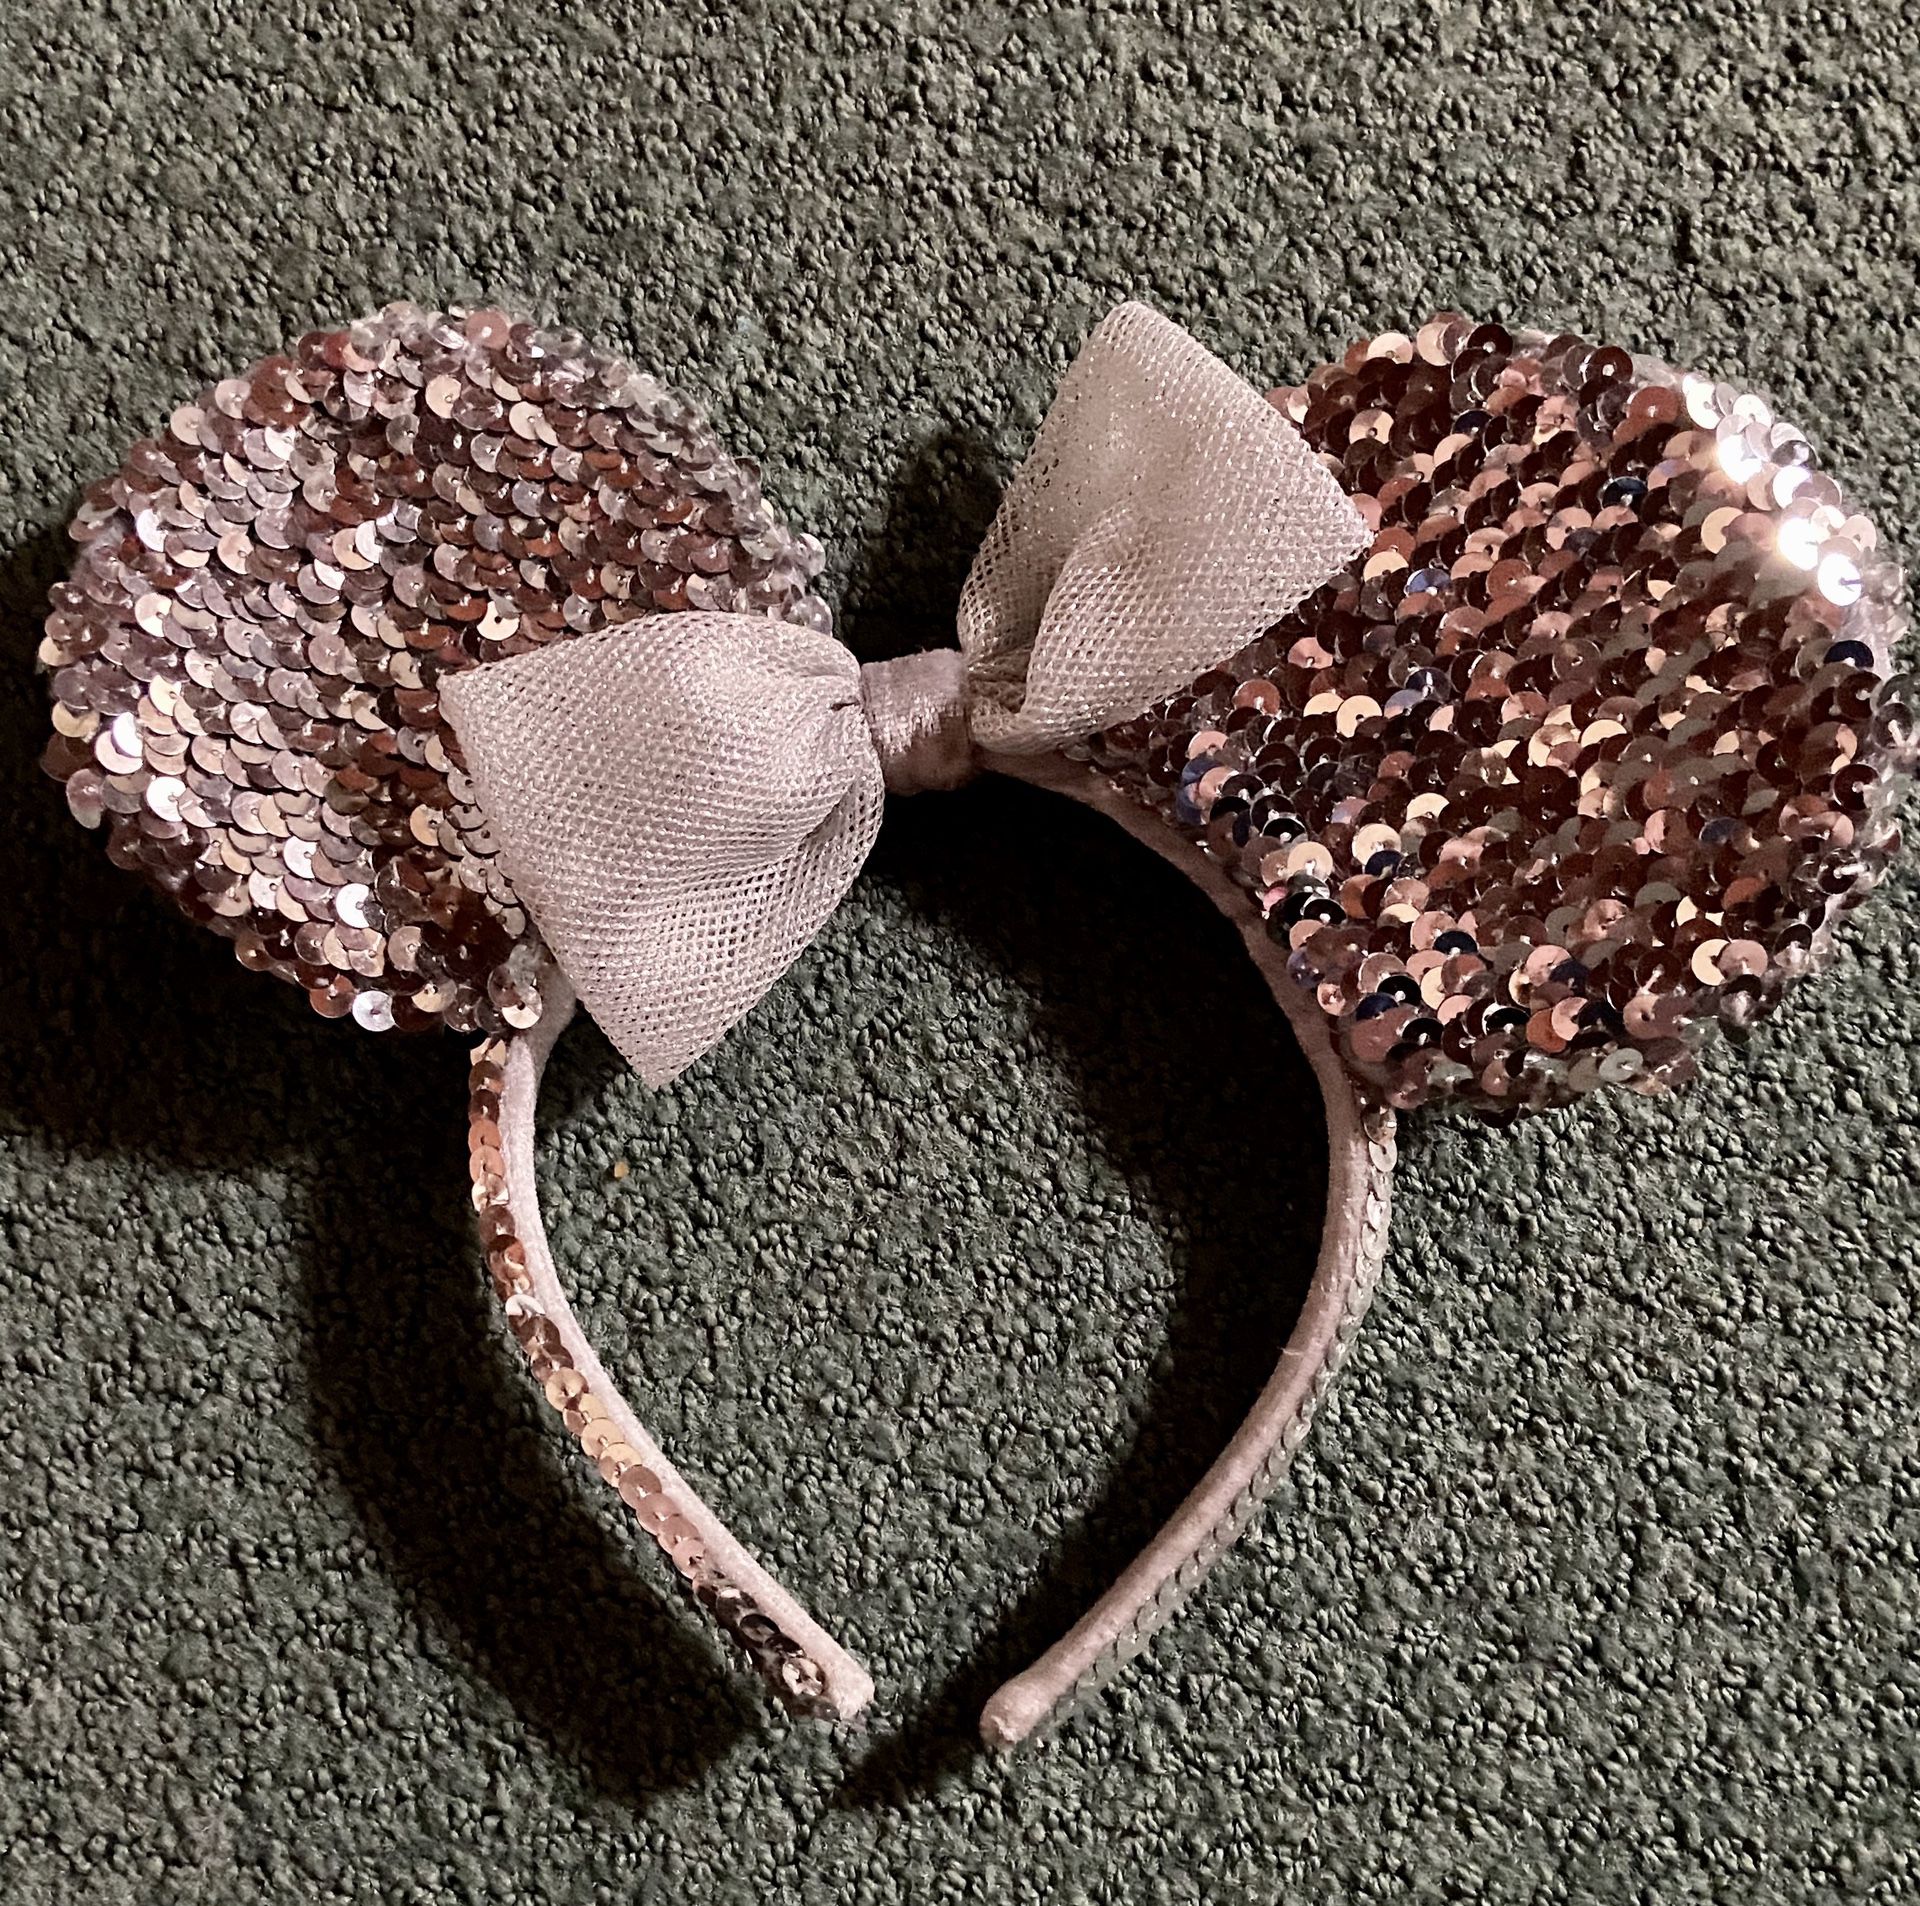 Disney Minnie Mouse Silver Sparkly Ears Headband! #disney #halloween #minniemouse #costume